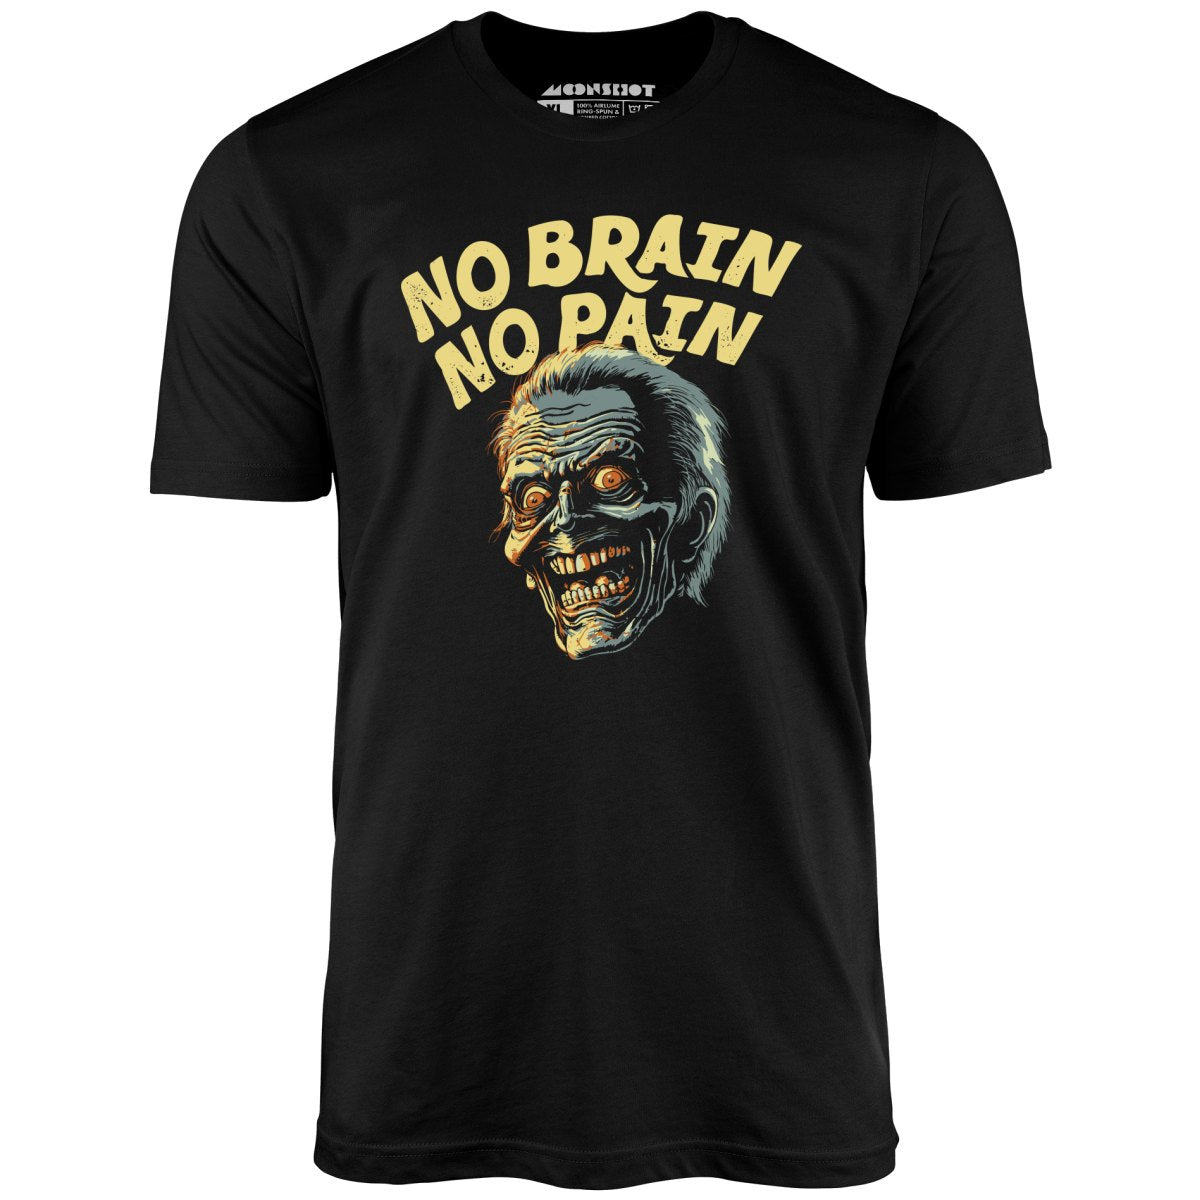 No Brain No Pain - Unisex T-Shirt